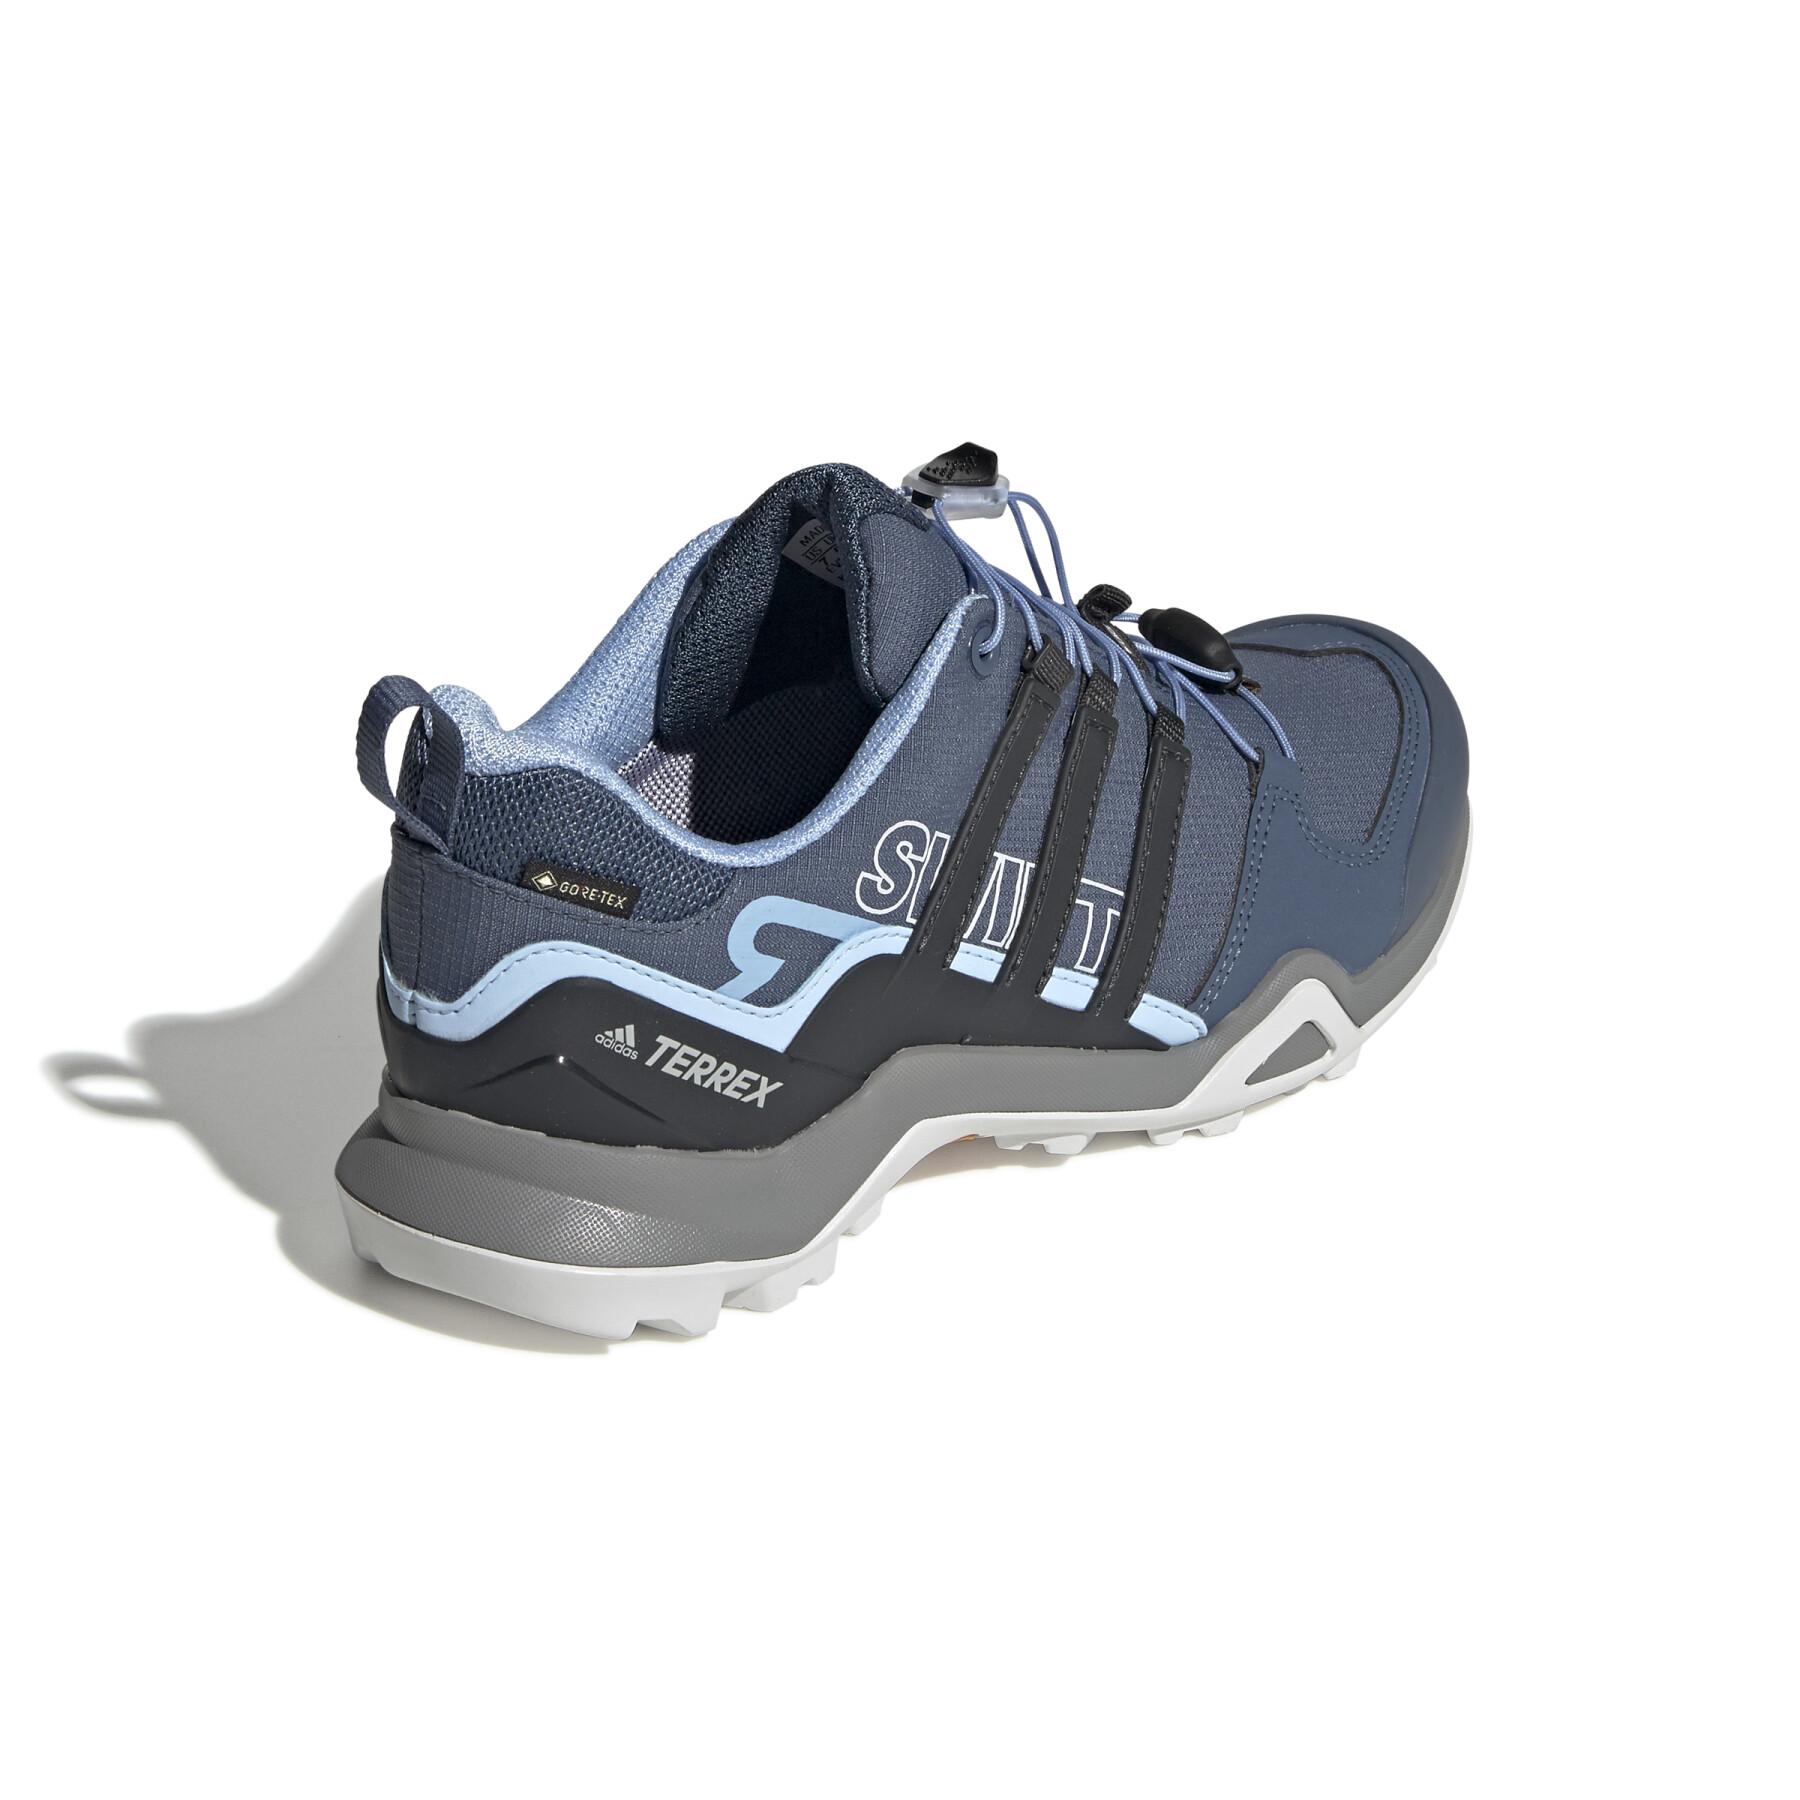 Women's Trail running shoes adidas Terrex Swift R2 Gtx